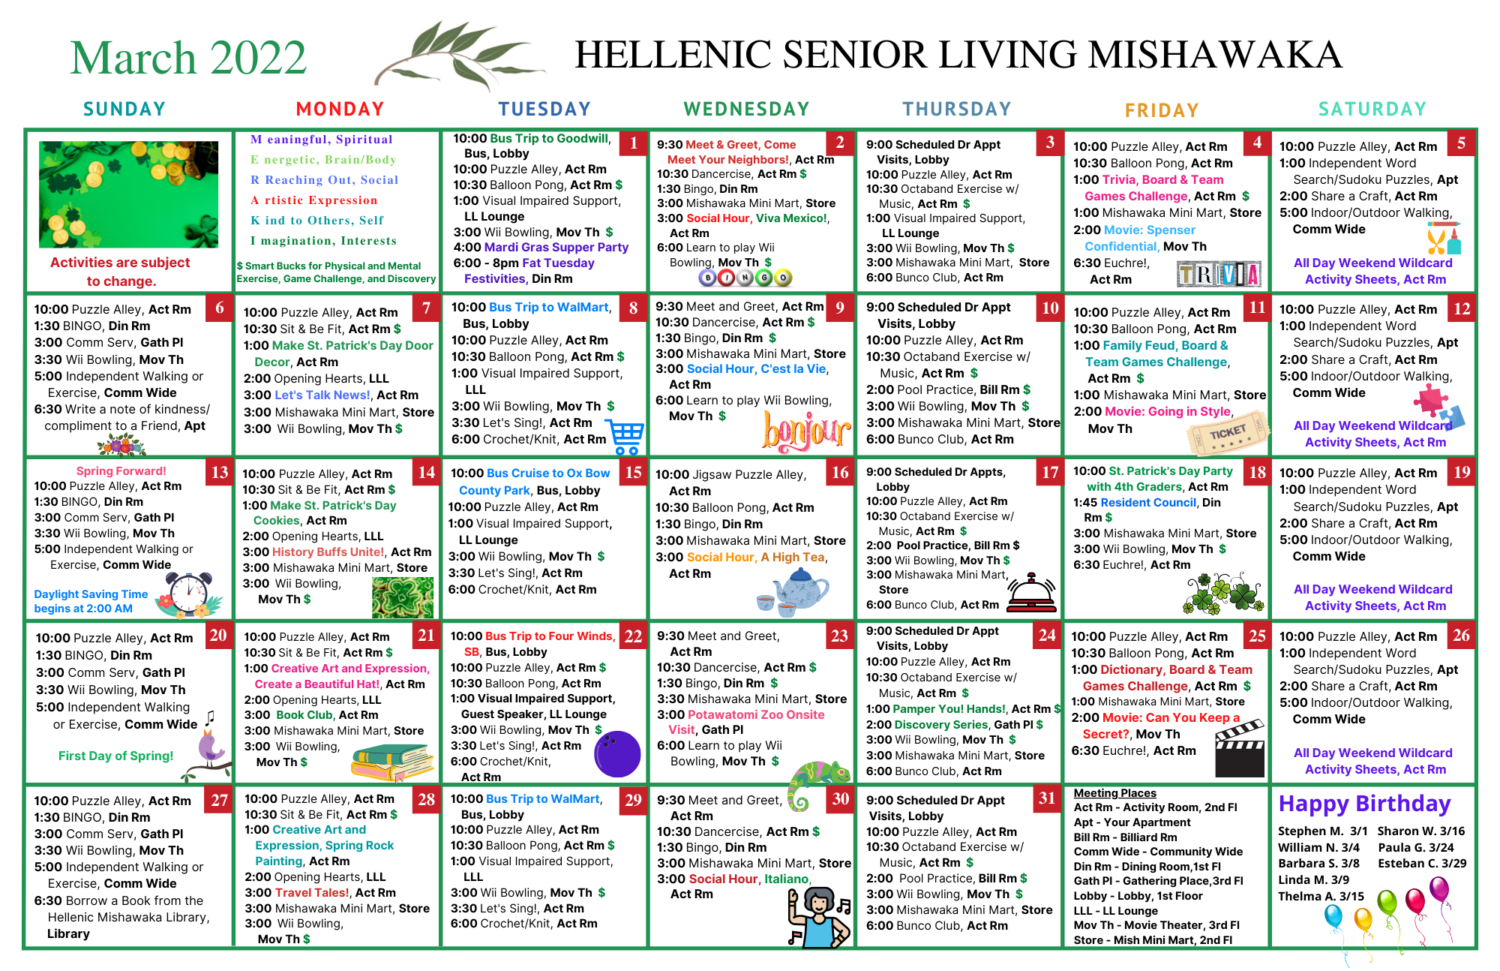 March Activity Calendar for Hellenic Senior Living